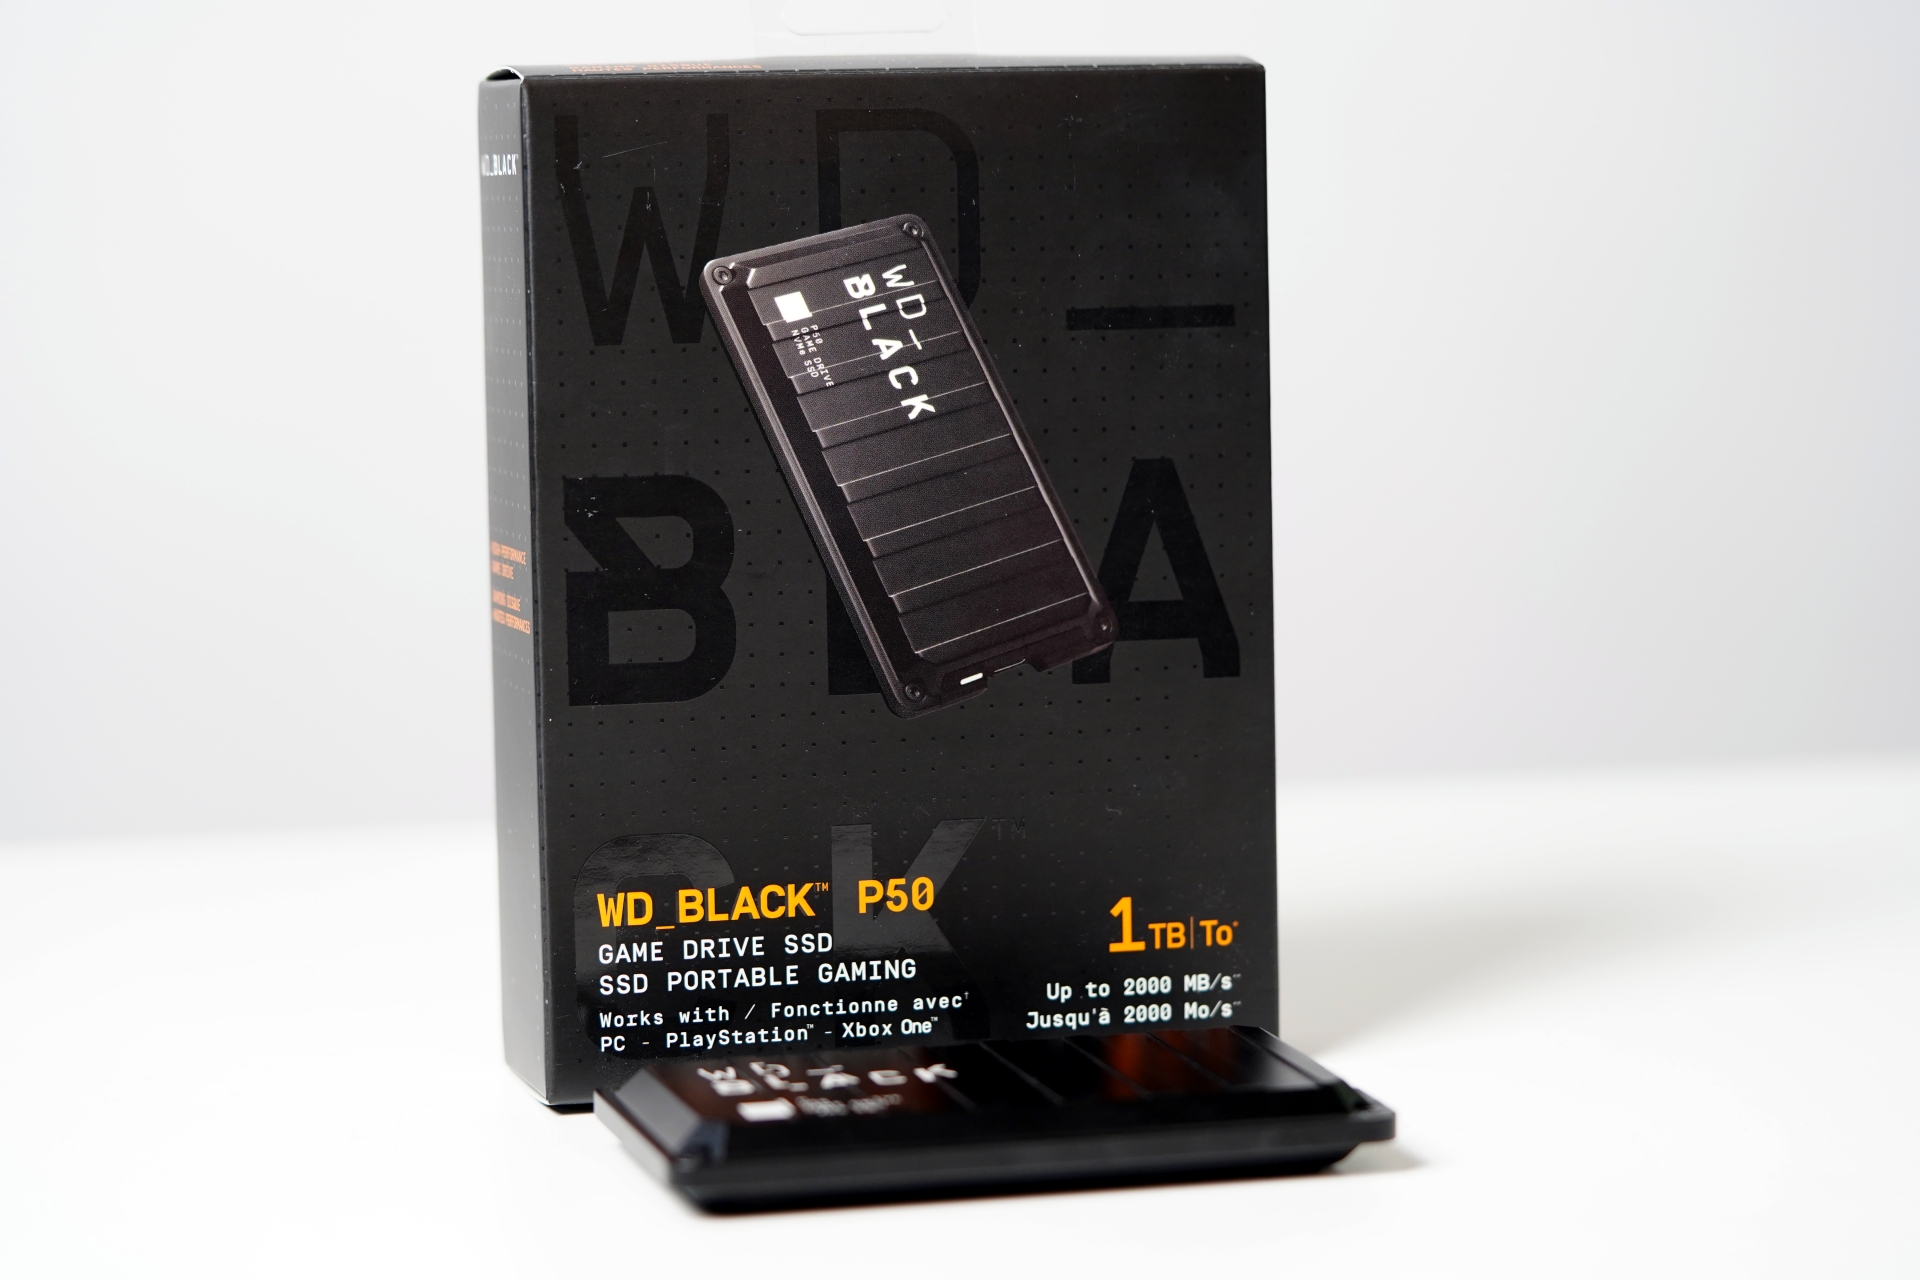 WD_BLACK P50 1 TB